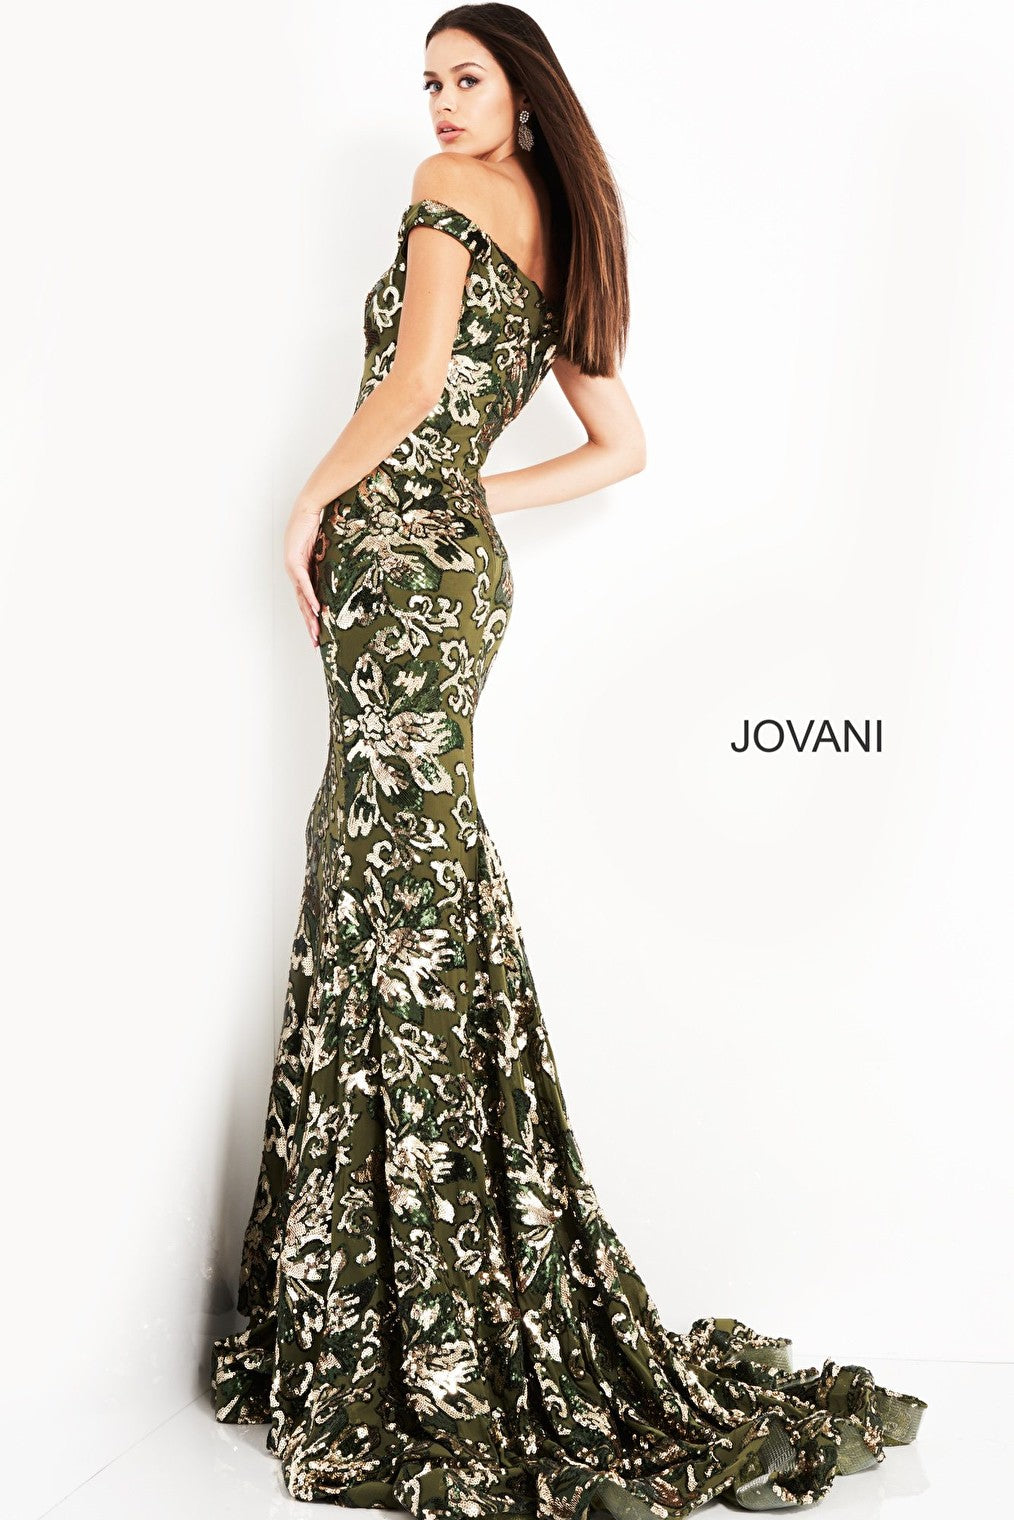 Green gold evening dress Jovani 63516 with train